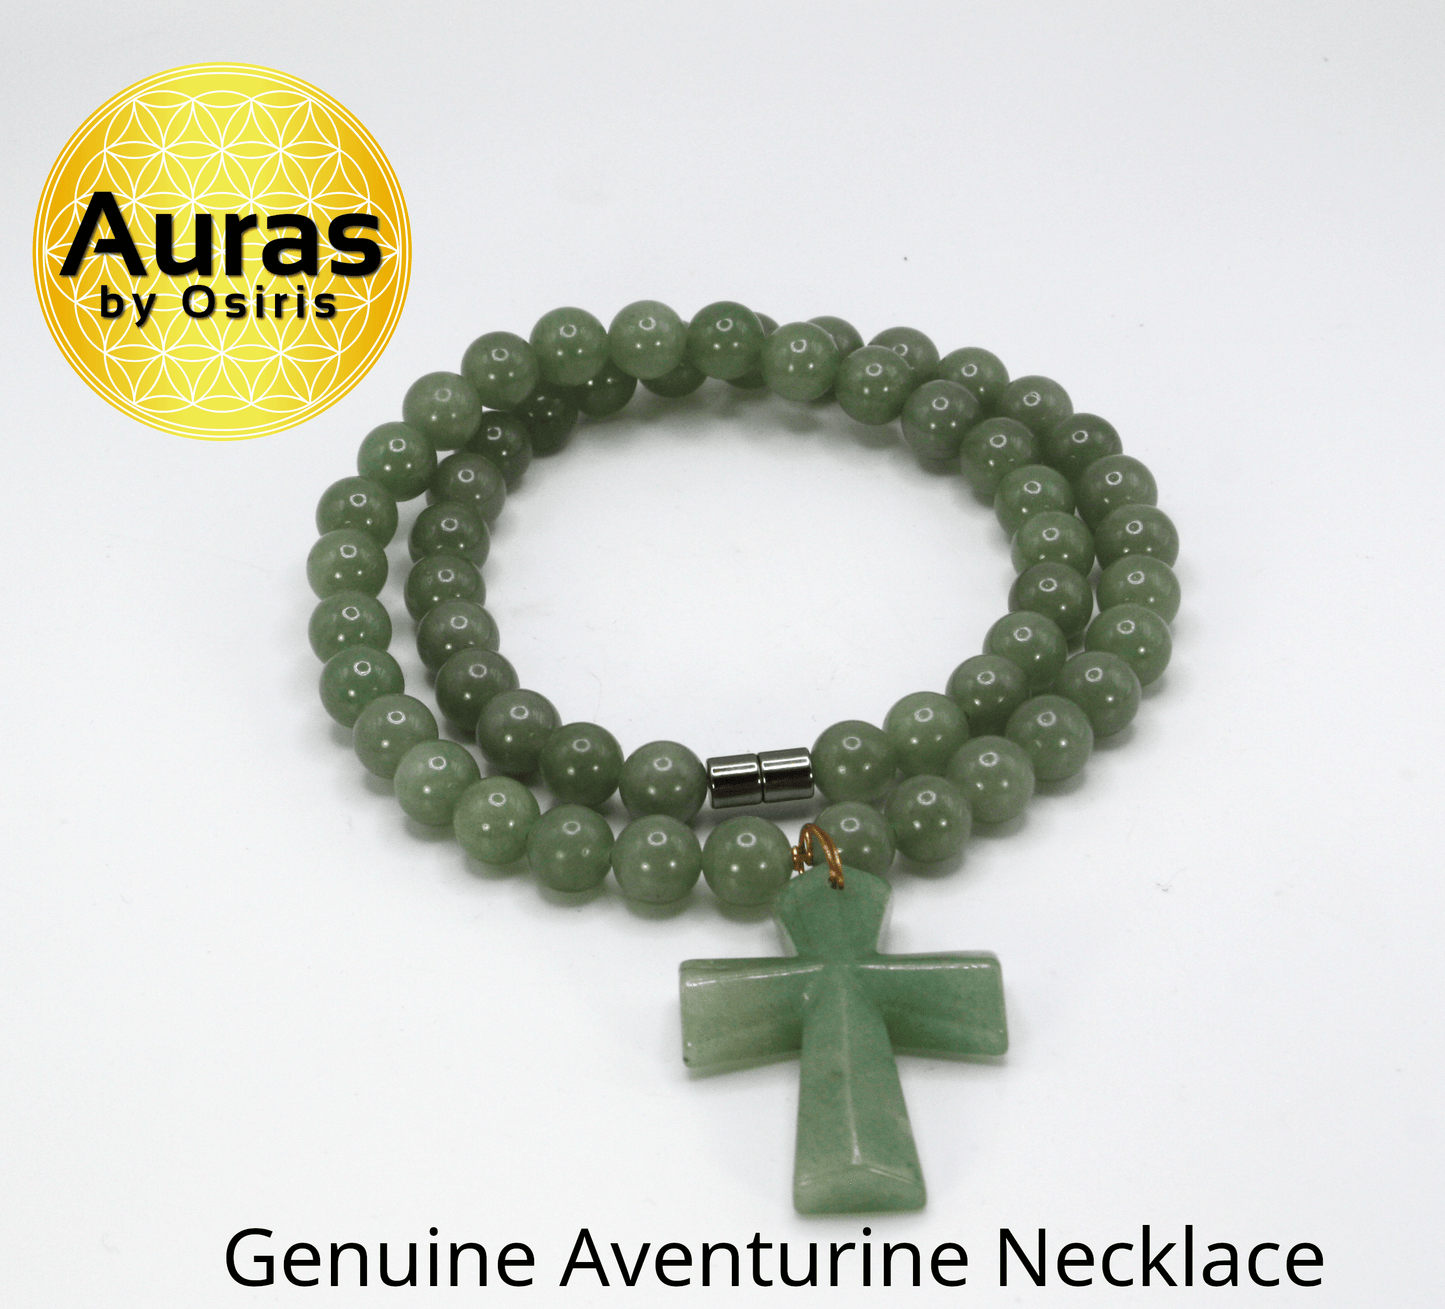 Genuine Aventurine Pendant Necklace - Gift for Men/Woman - Spiritual Accessories - Religious Symbol